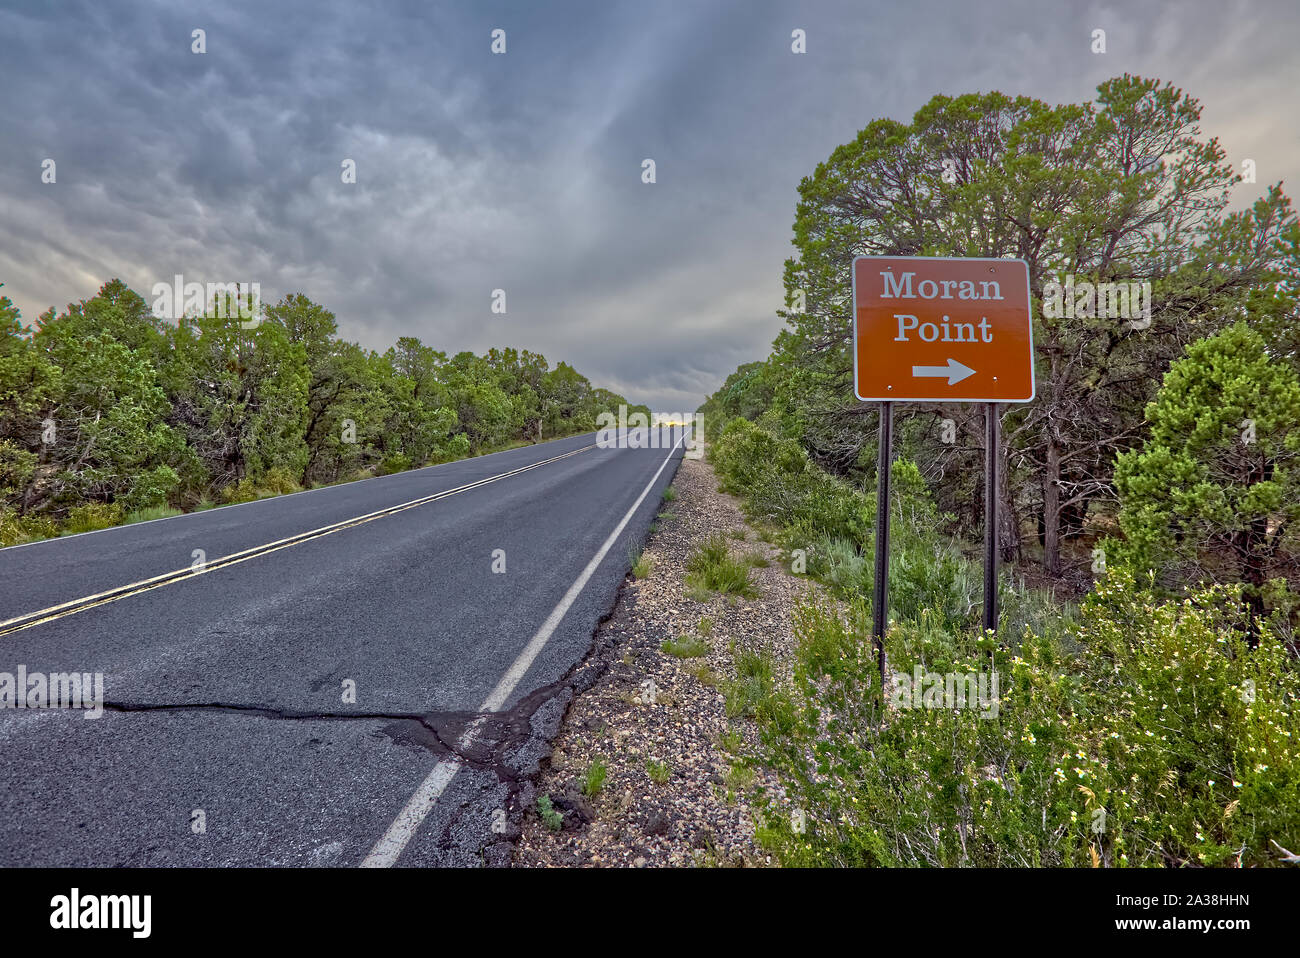 Moran Point road sign along Highway 64, Grand Canyon, Arizona, United States Stock Photo